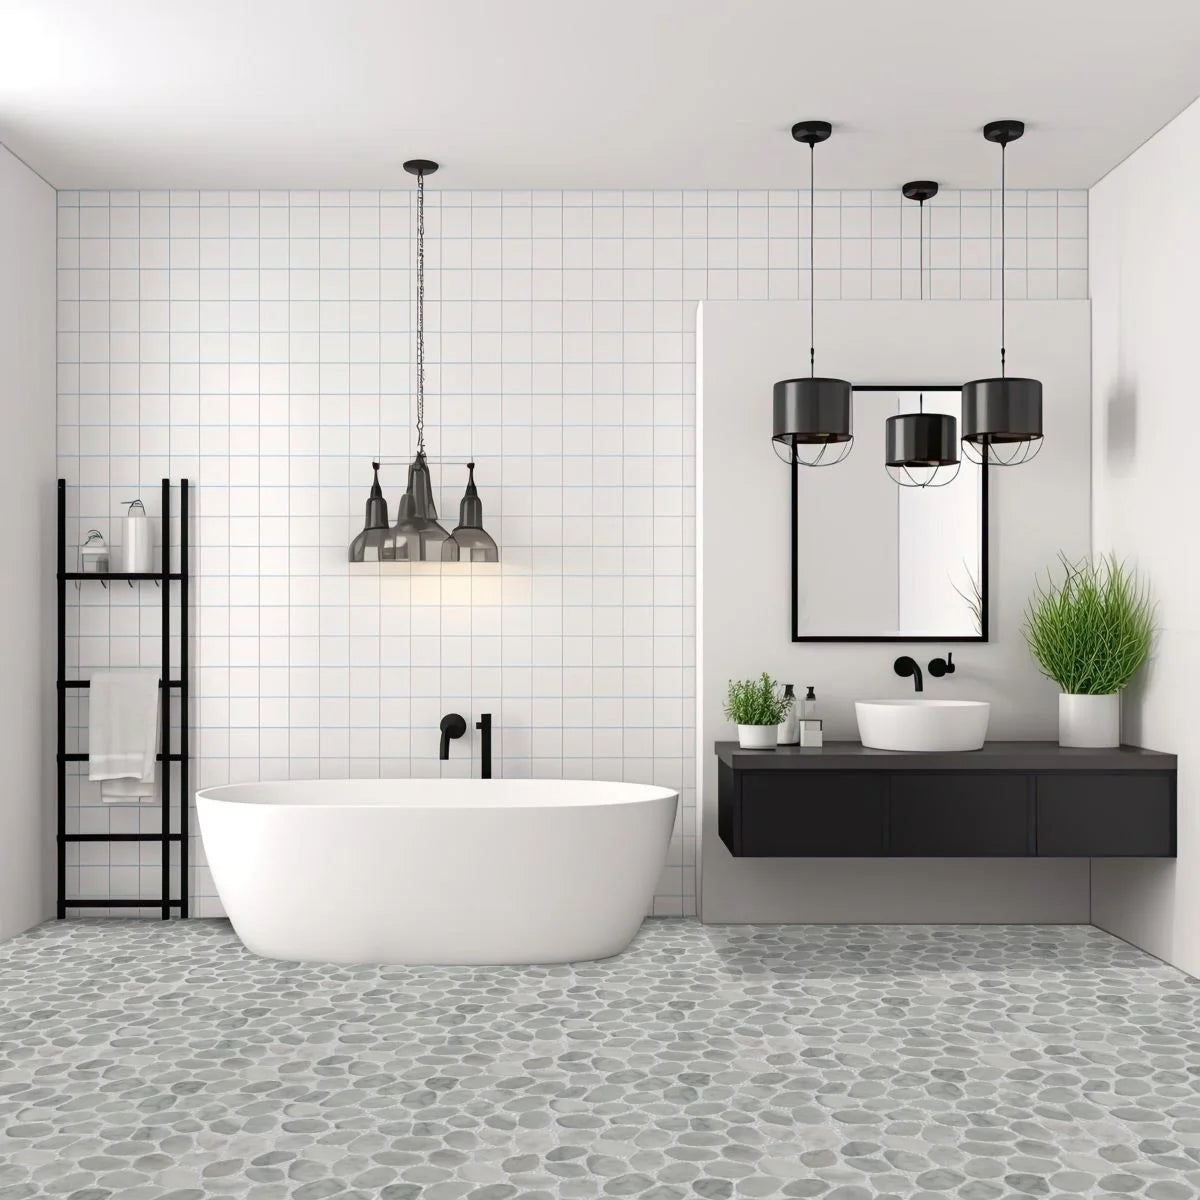 Slice Carrara tile flooring in a bathroom with a white bathtub